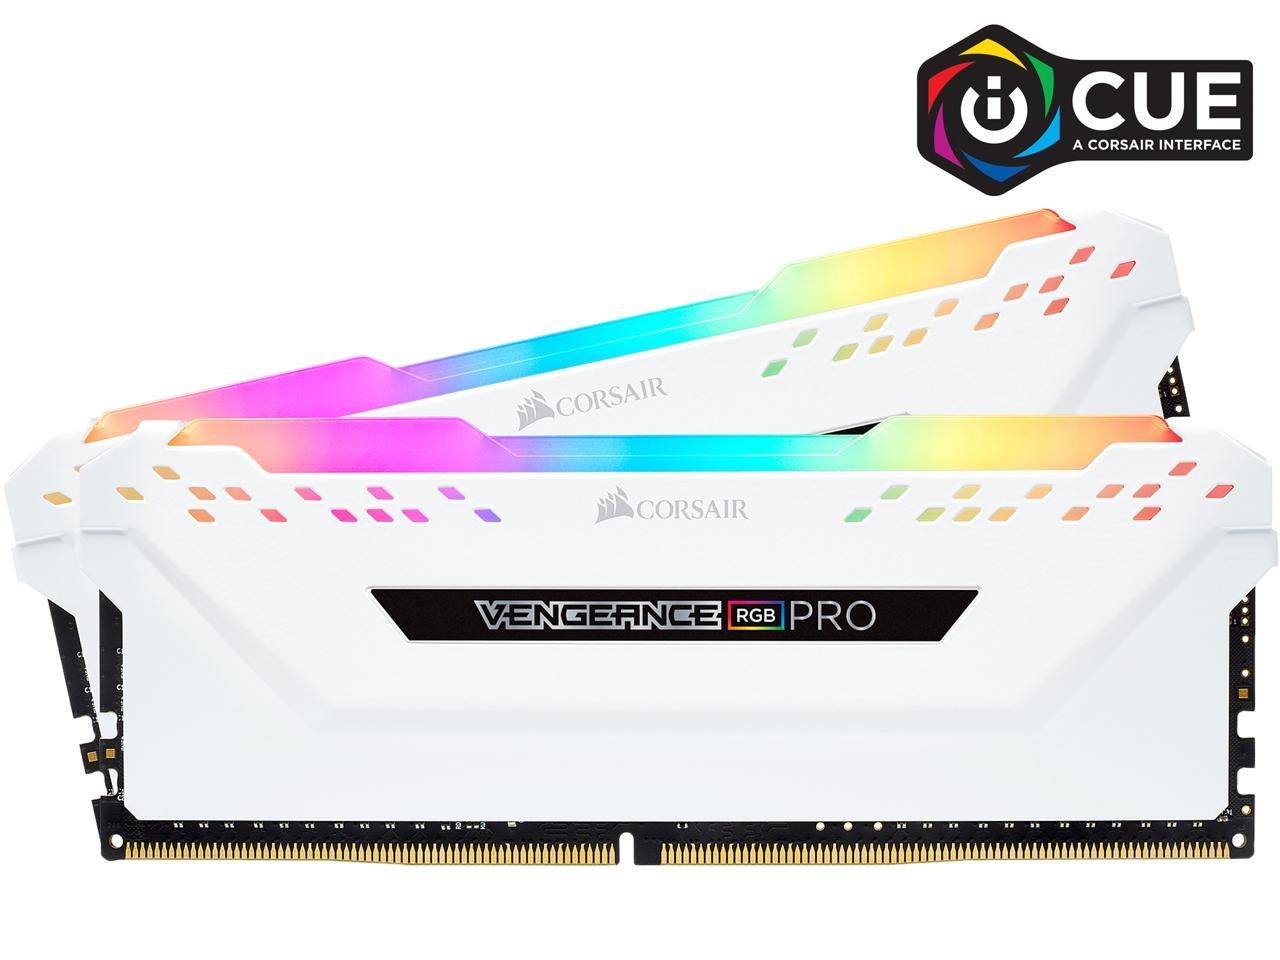 Corsair Vengeance RGB Pro 16GB (2 x 8GB) 288-Pin DDR4 3200 PC4 25600 Memory $76 at Newegg